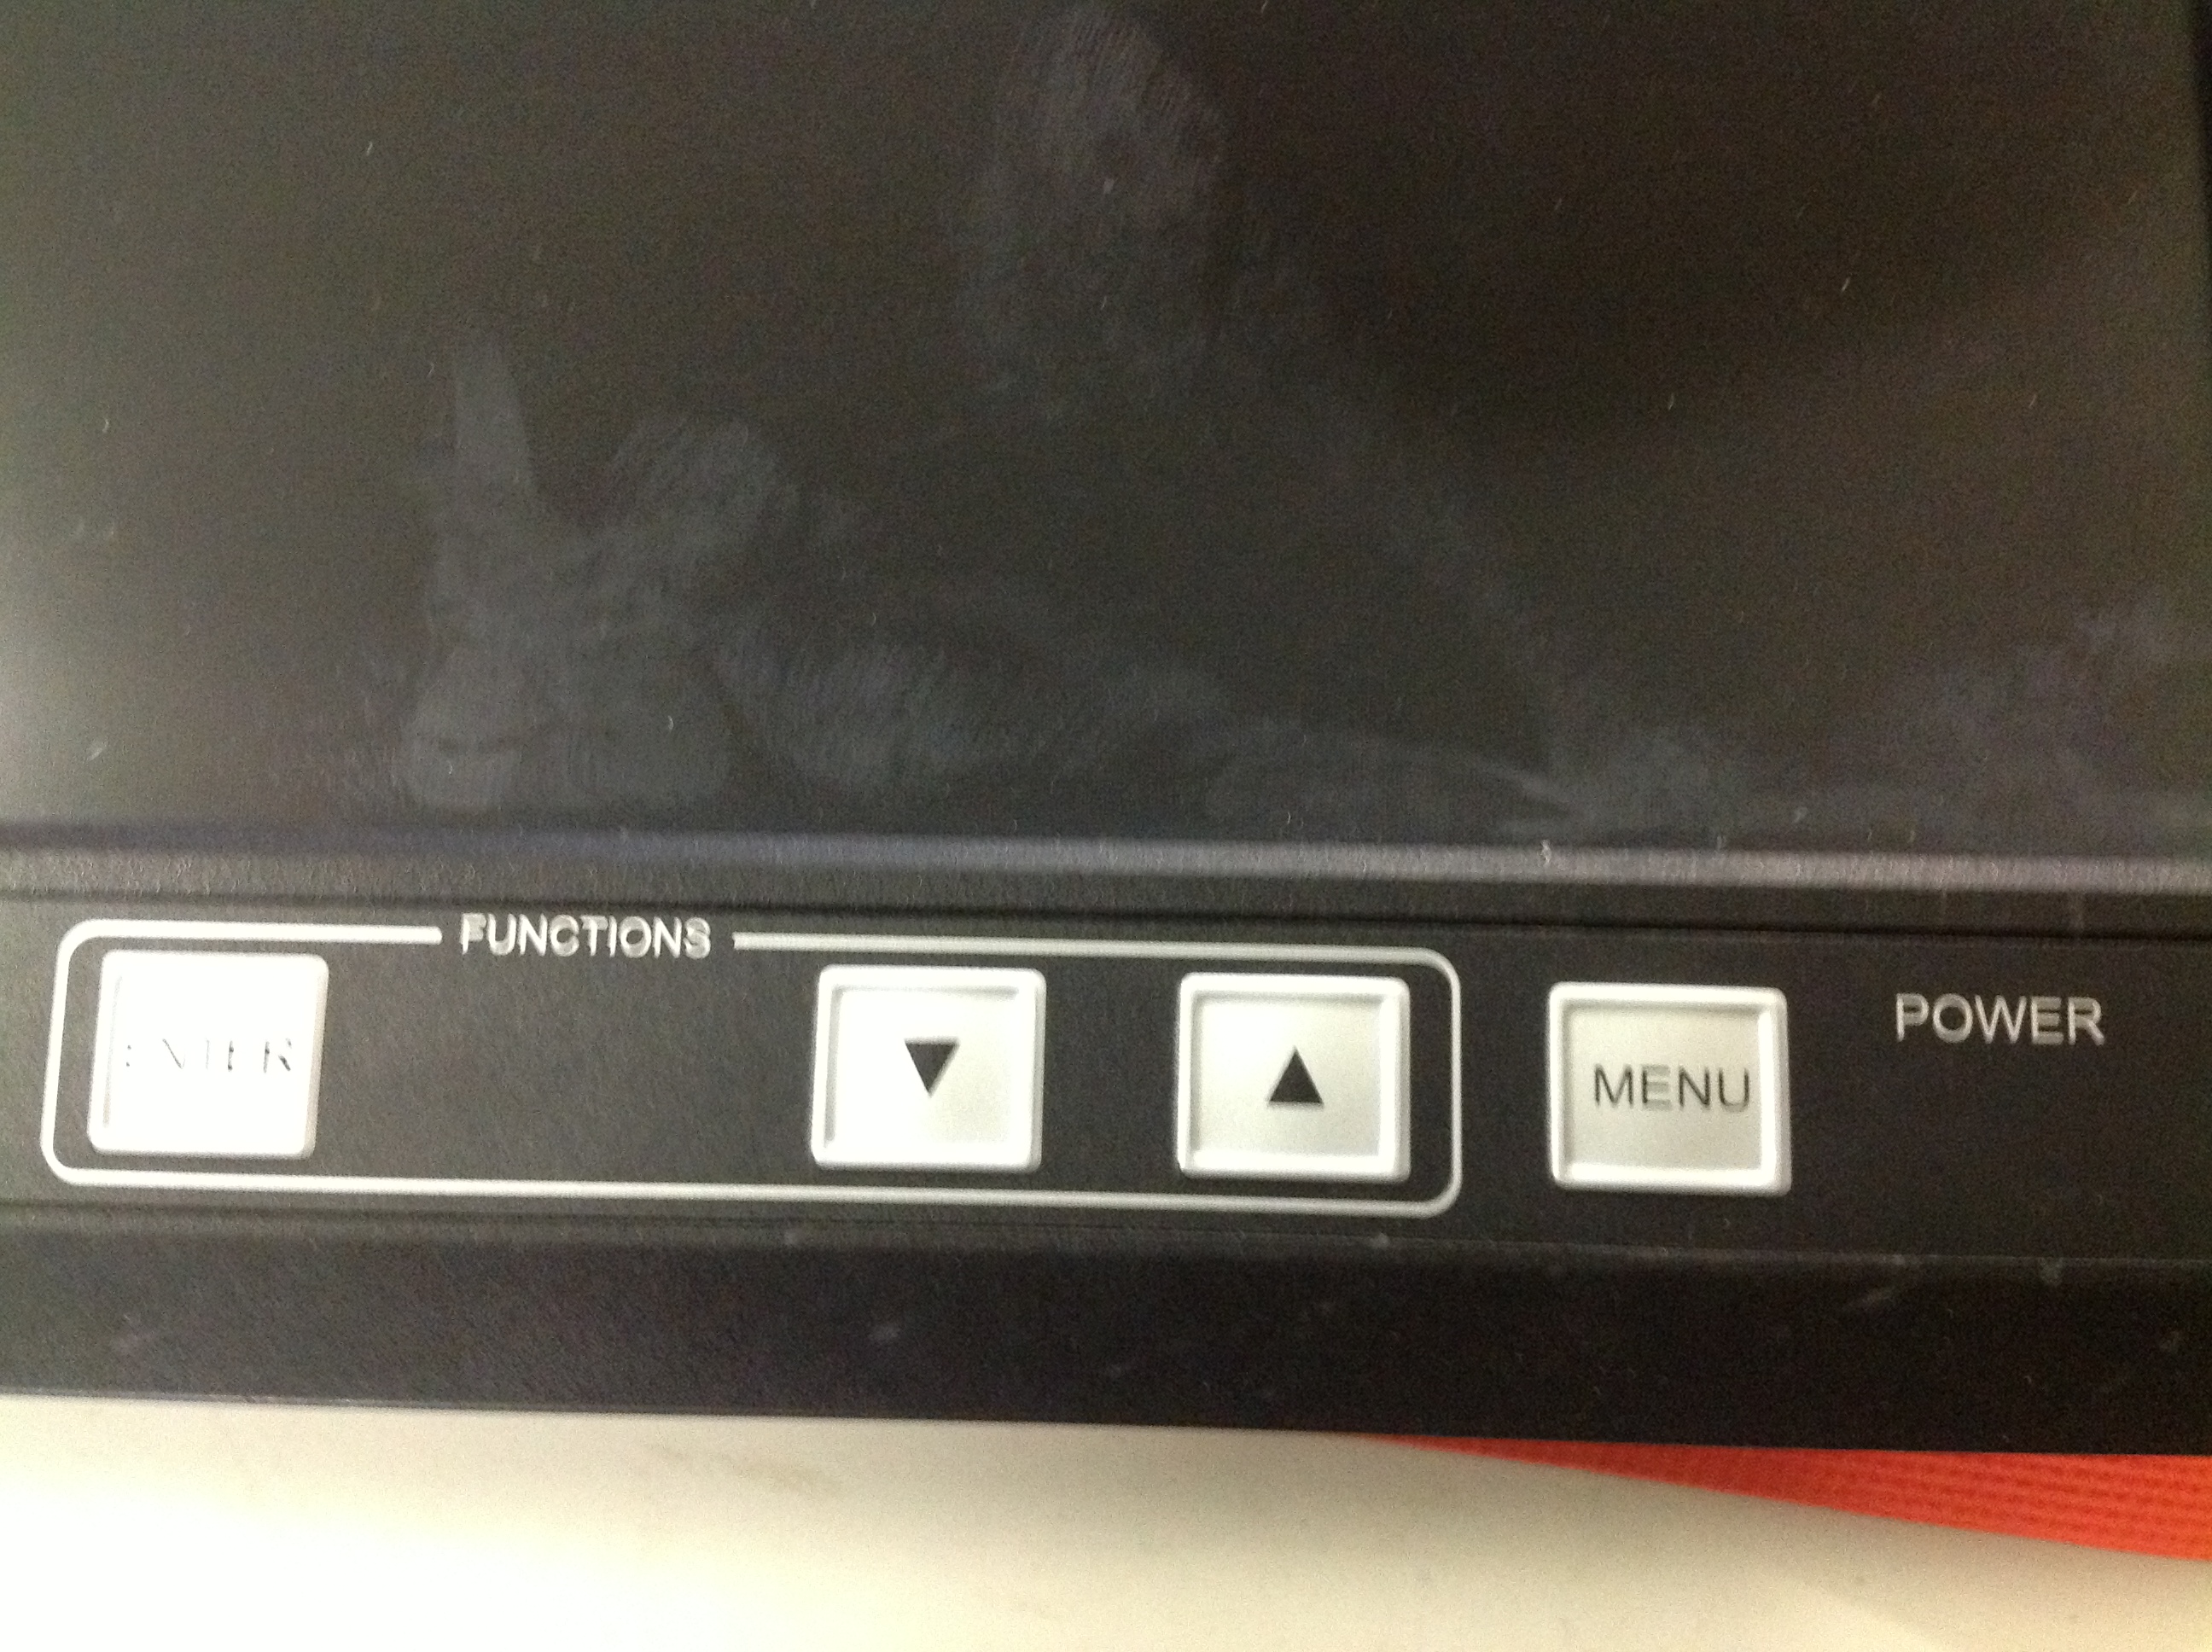 Flachbildschirm, Monitor Barco RFD 251